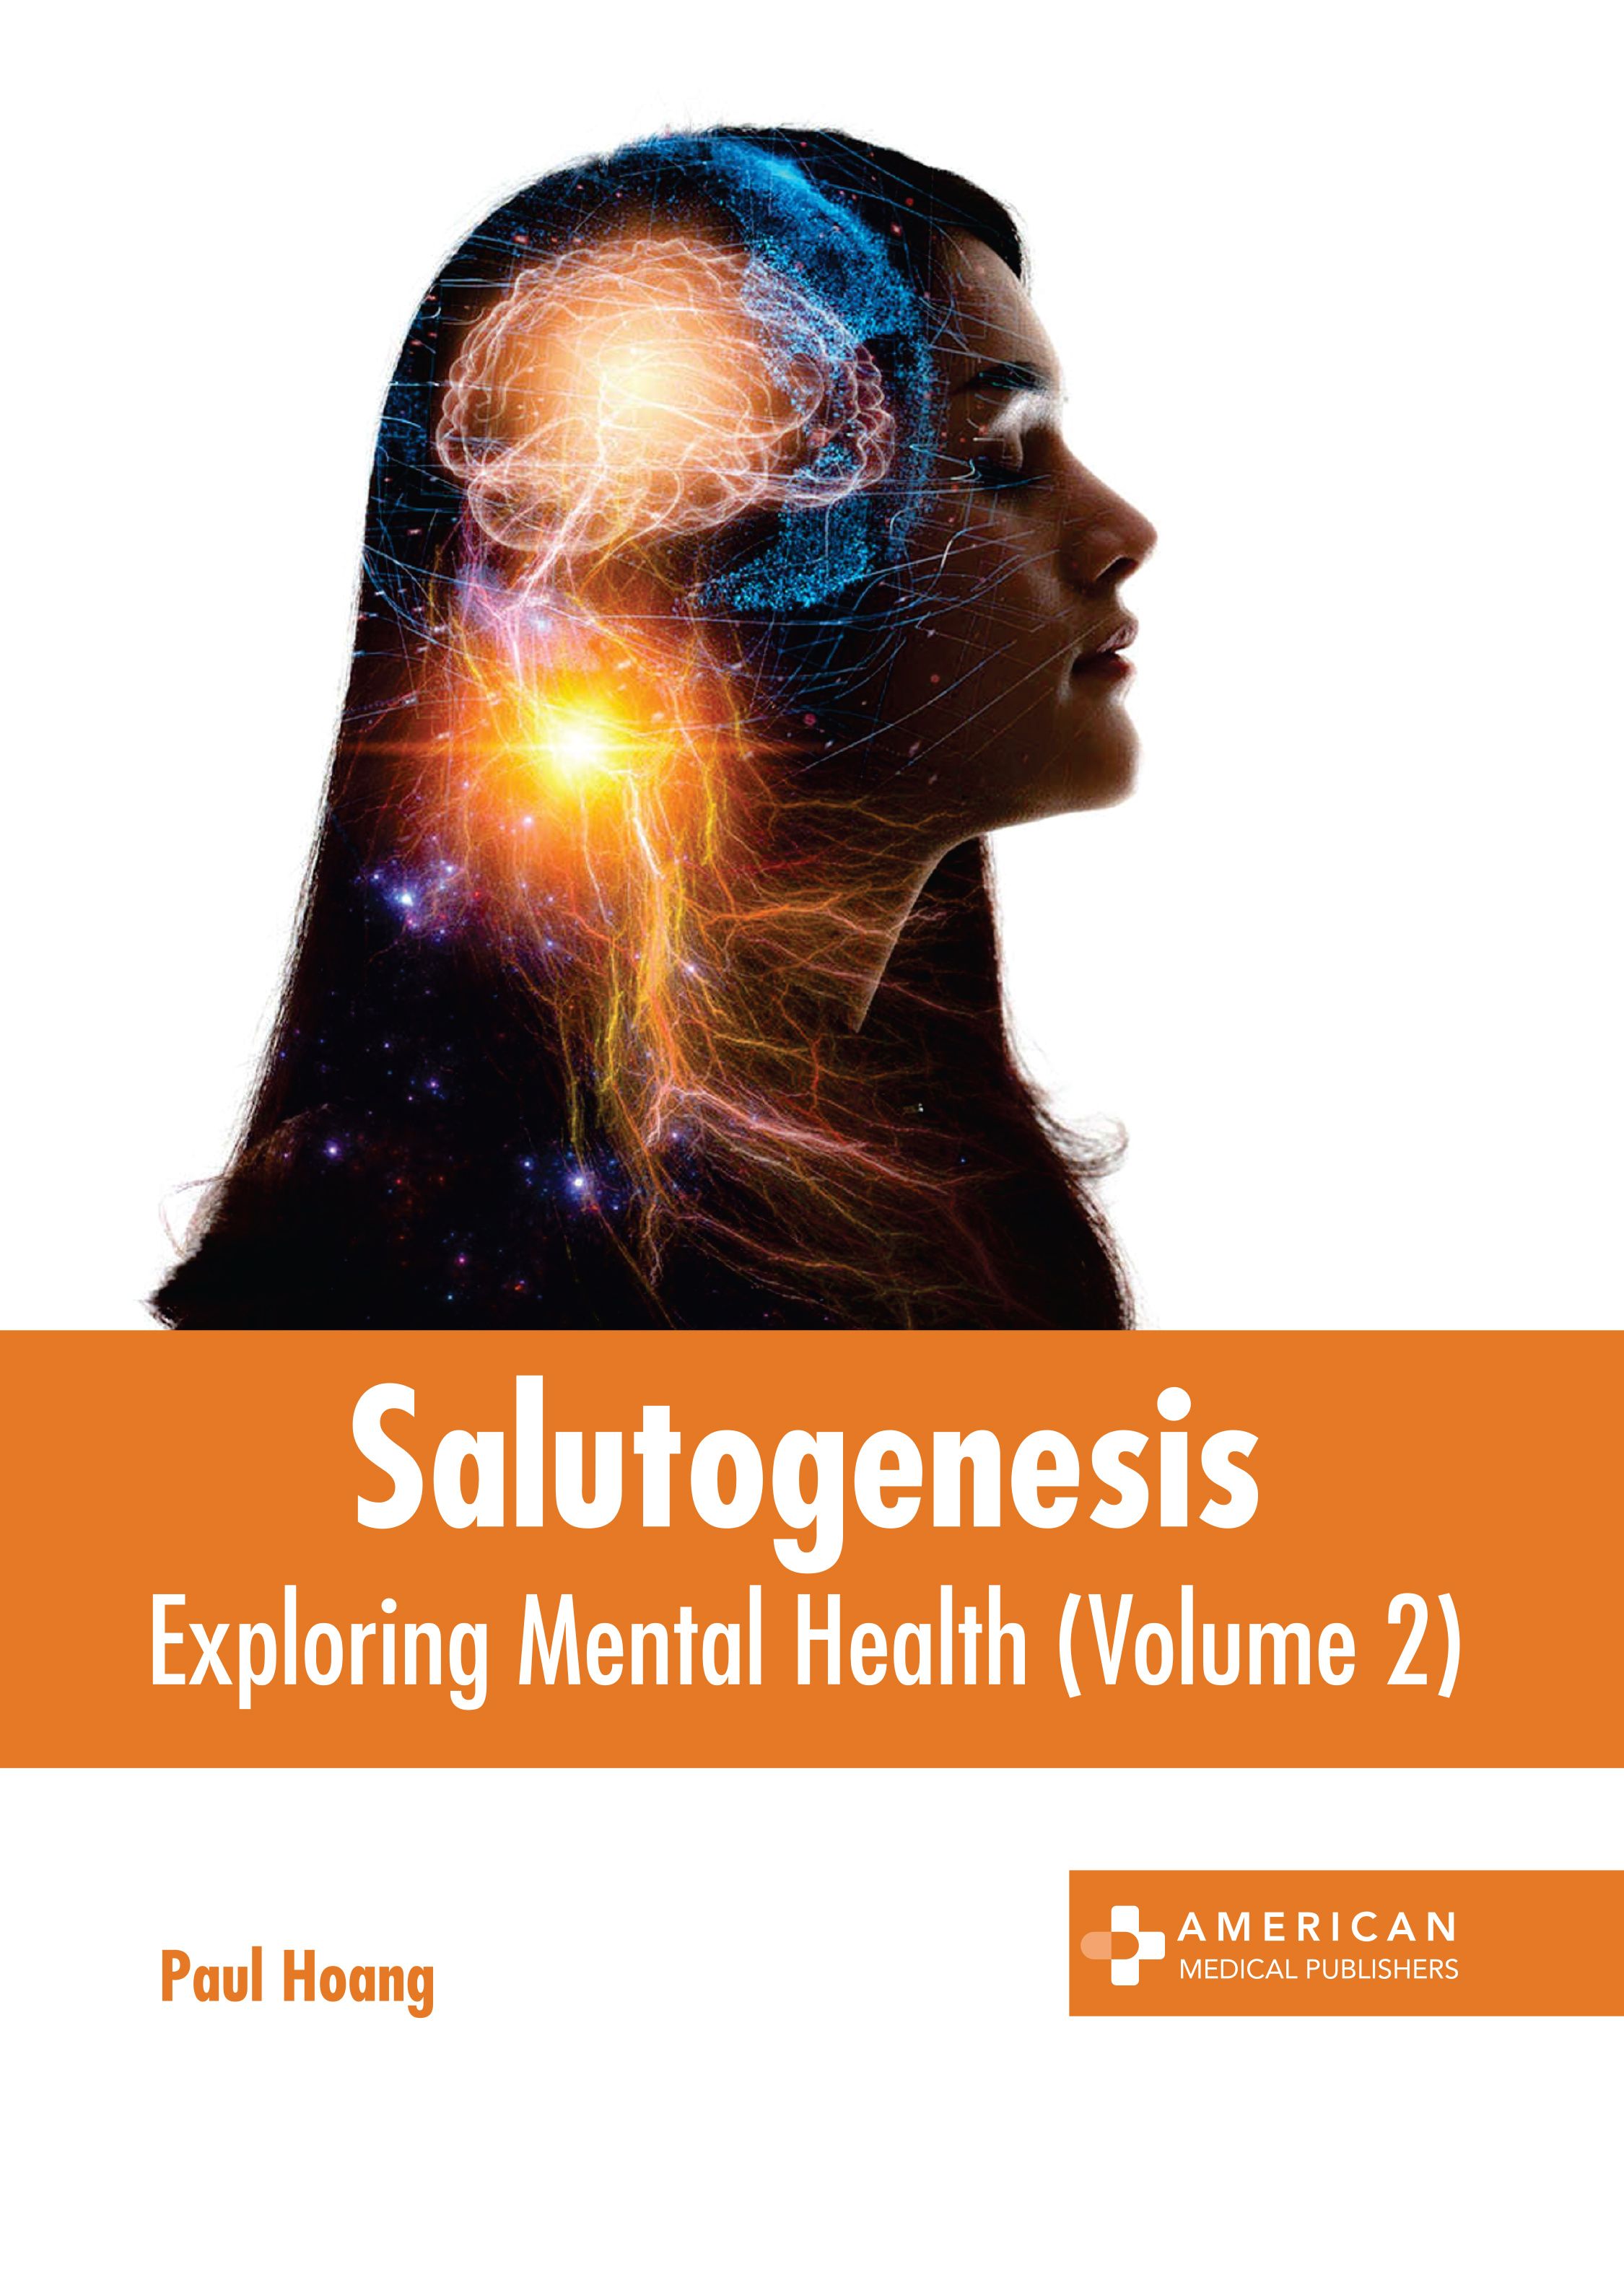 SALUTOGENESIS: EXPLORING MENTAL HEALTH